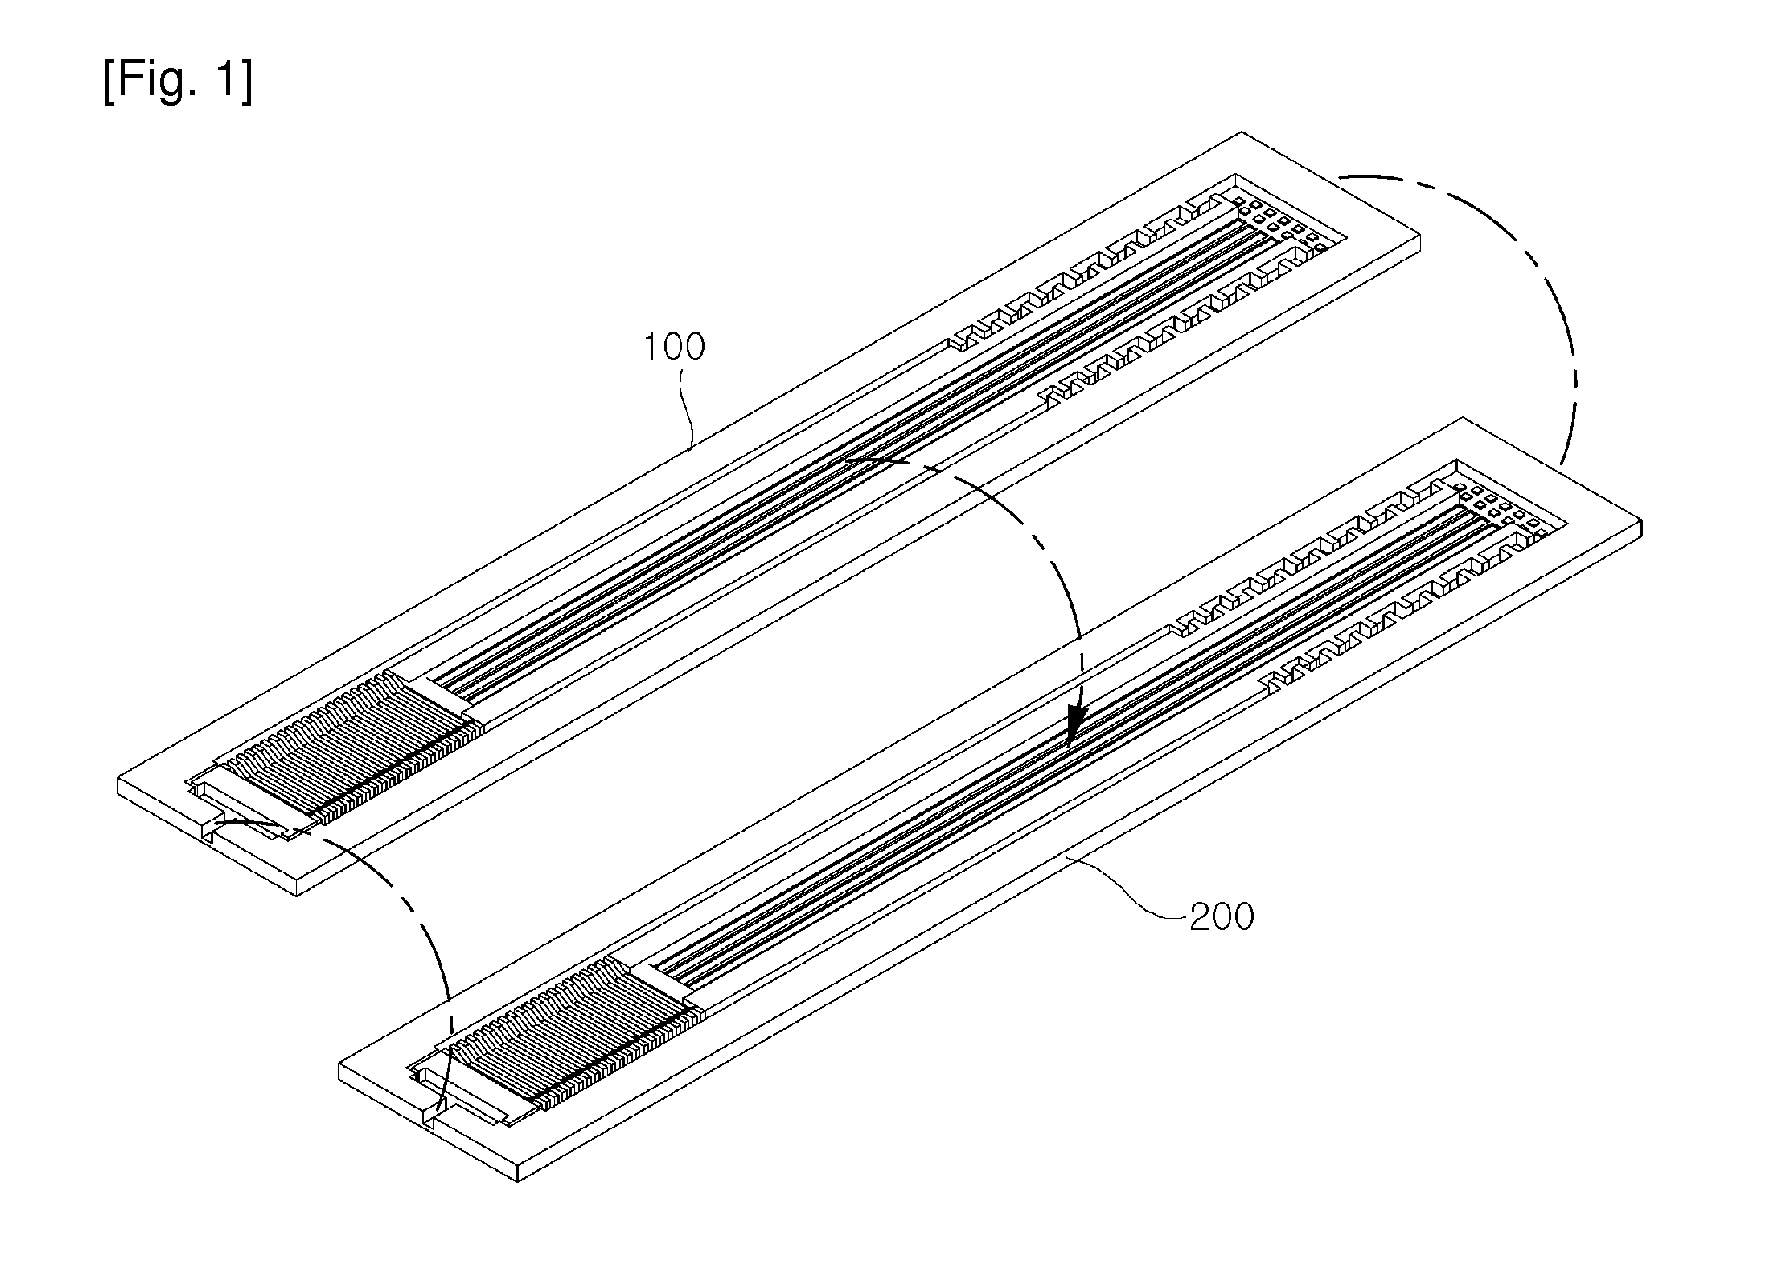 Flat plate type micro heat transport device